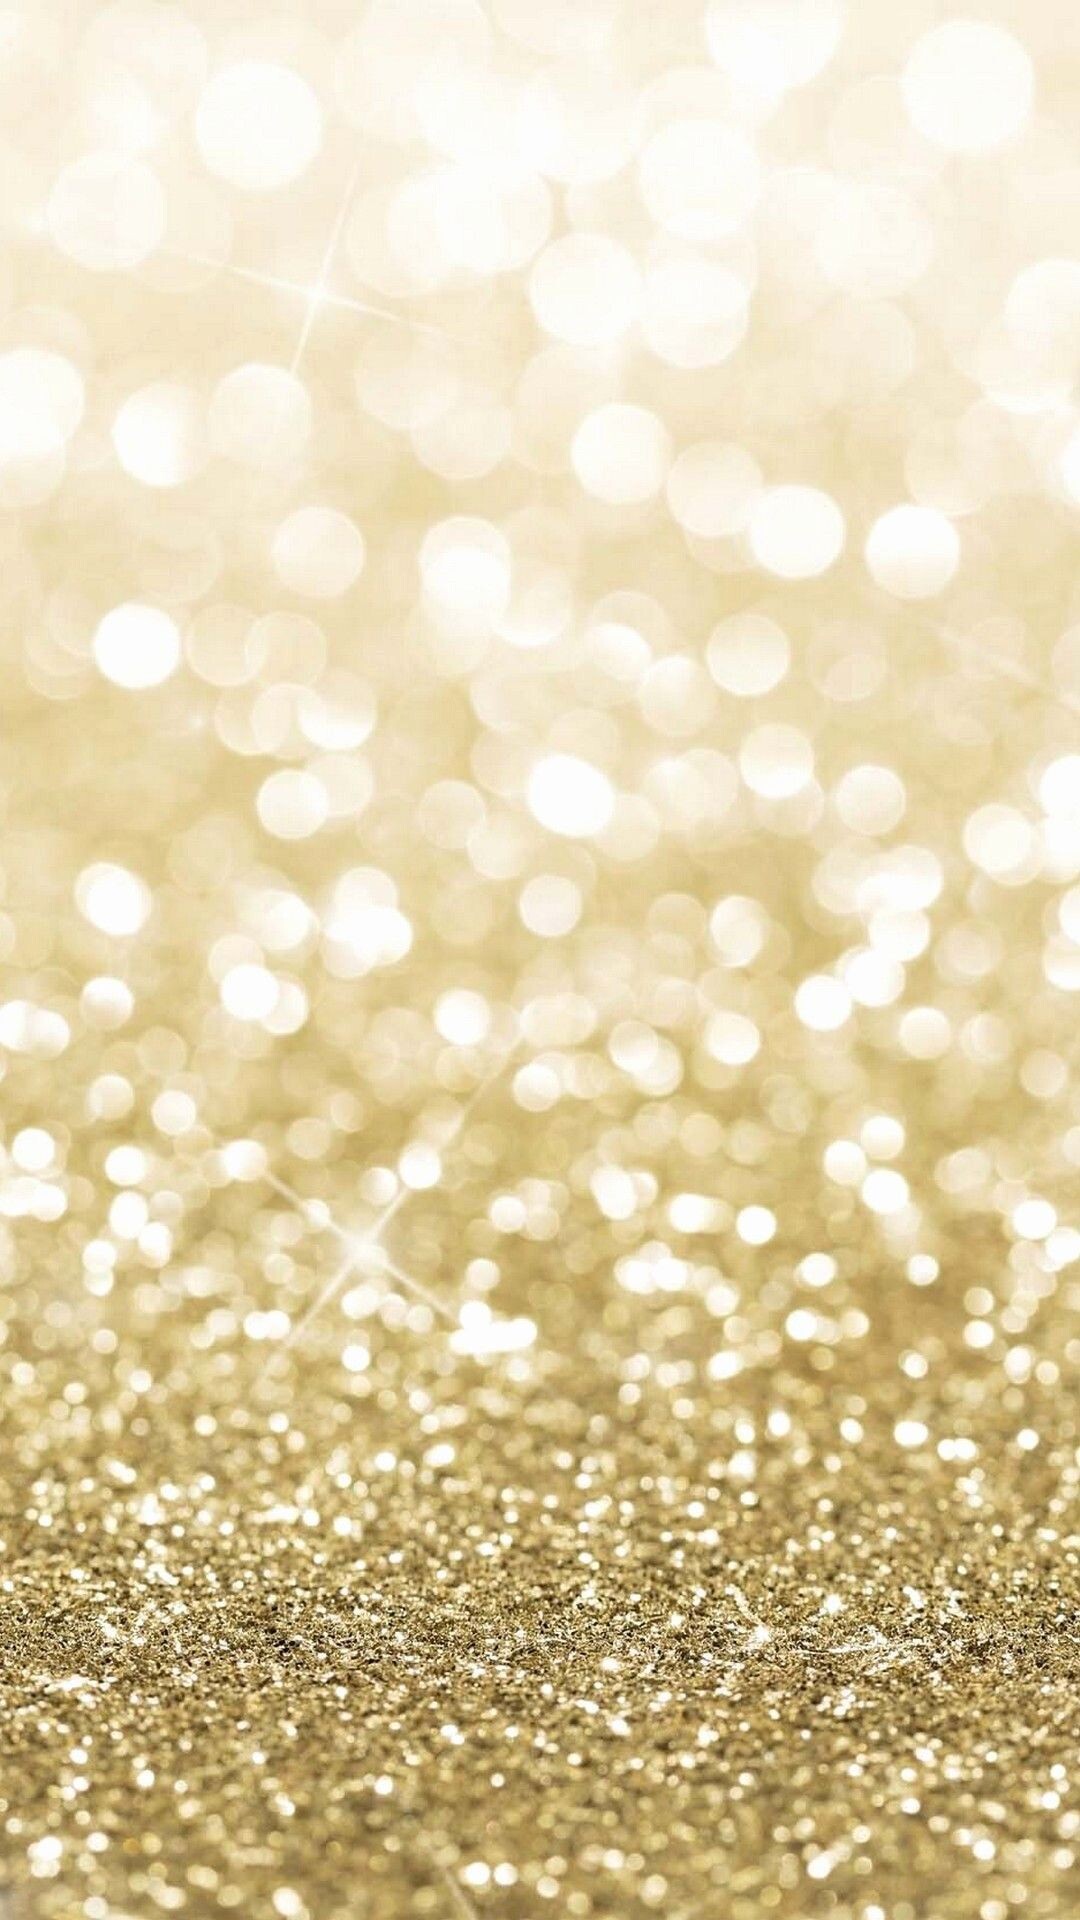 Gold Sparkle: Golden powder, Metallic shimmer eyeshadows, Super fine extra sparkly loose glitter. 1080x1920 Full HD Wallpaper.